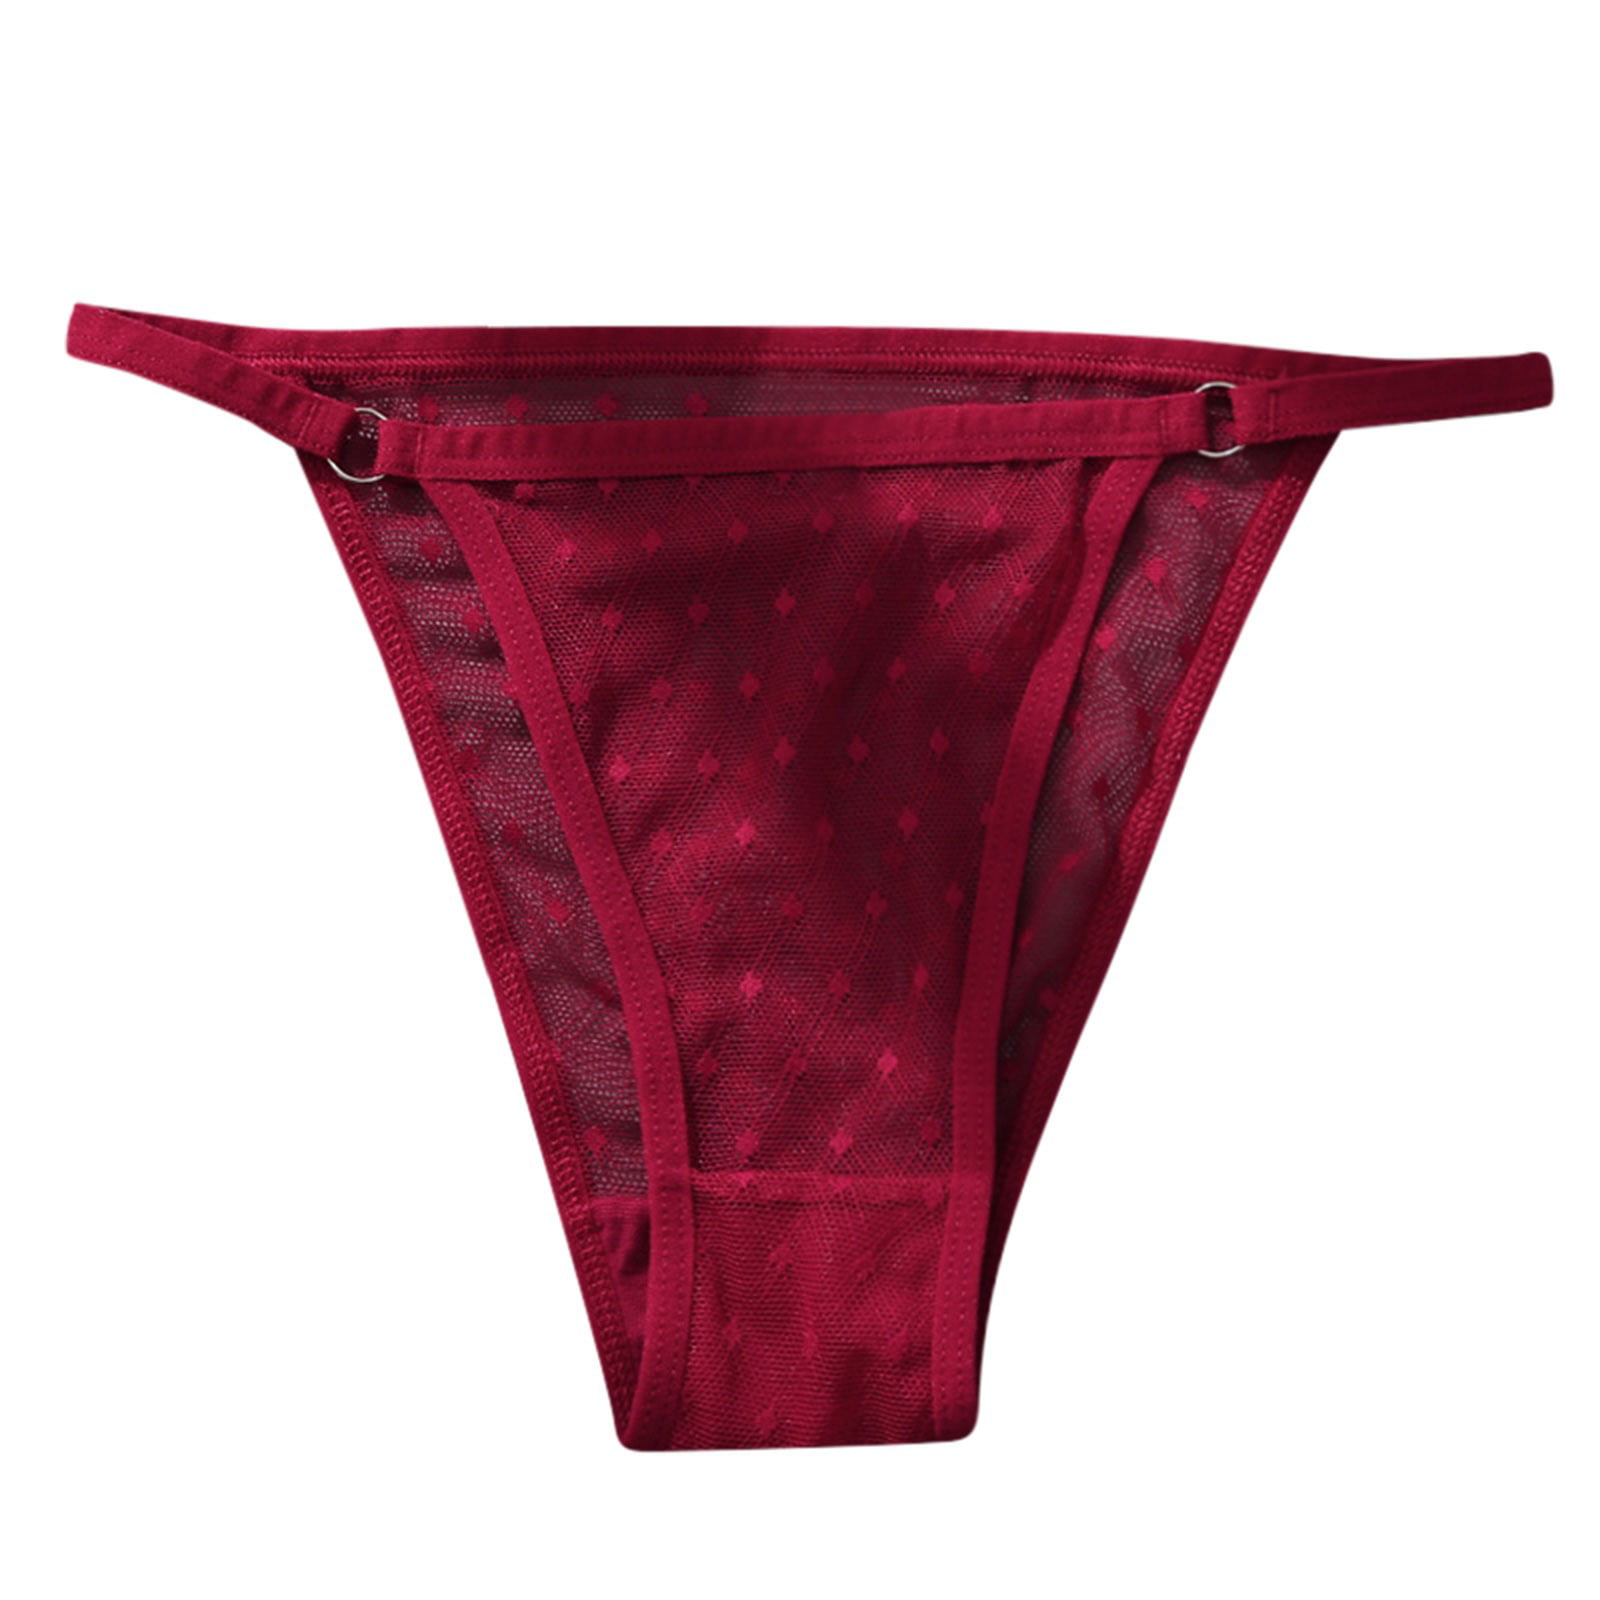 Shiusina New Hot Panties For Women Crochet Lace Lace-up Panty